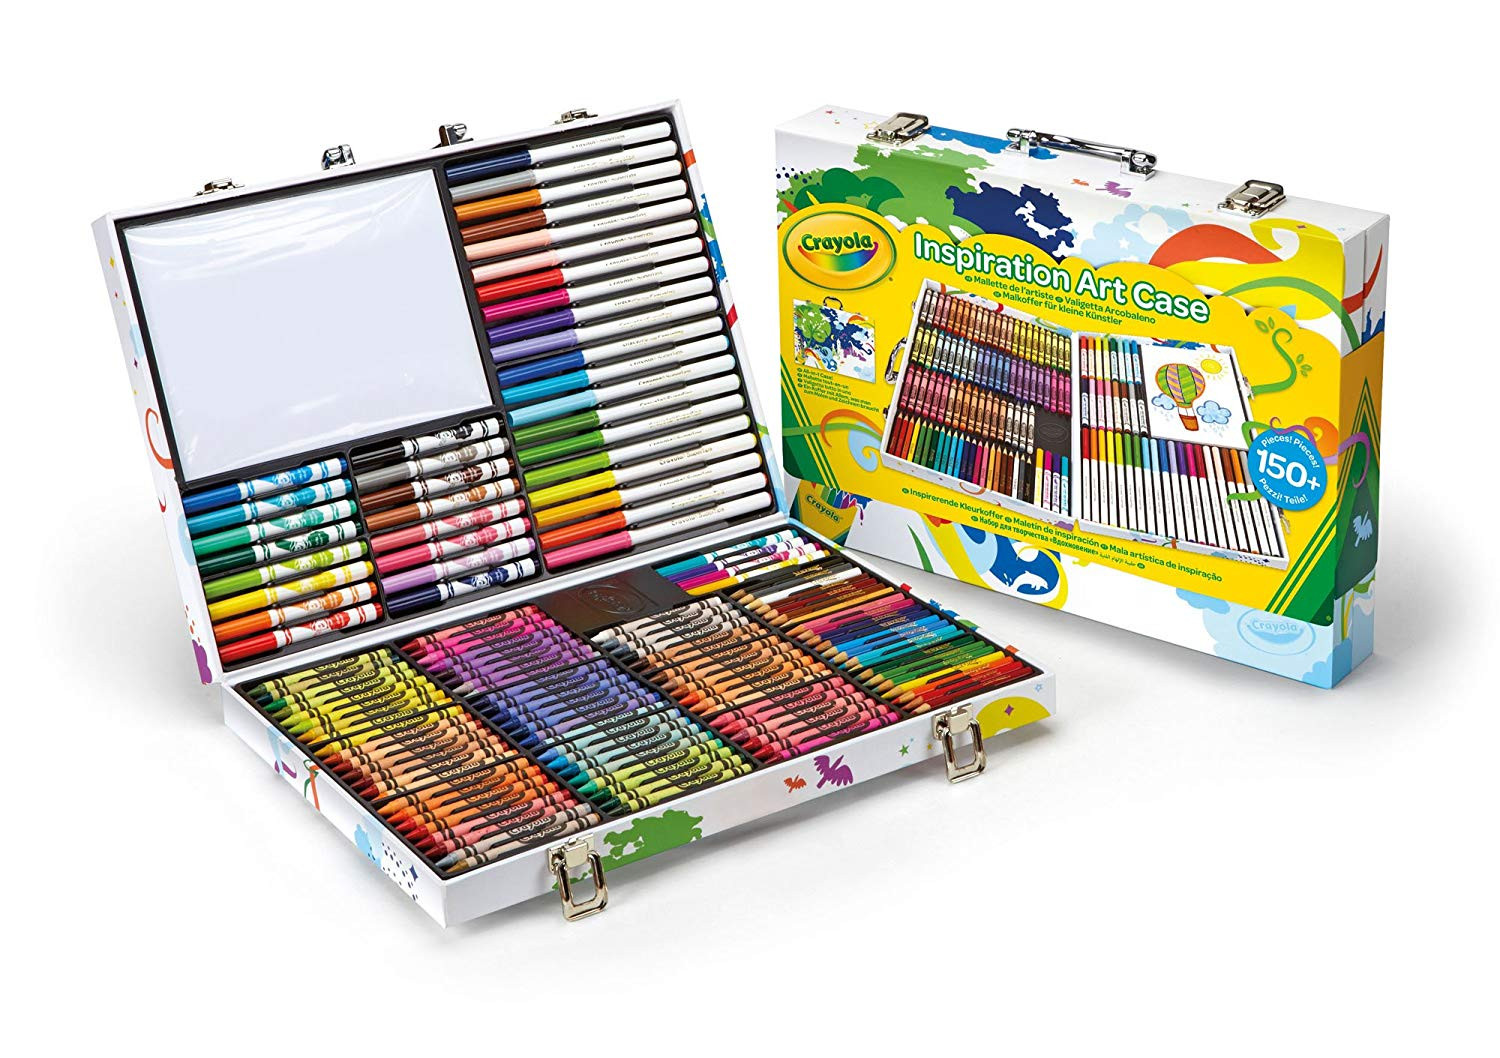 Craft Sets For Kids
 150 Crayola Crayon Set Inspiration Case Tower Art Tools